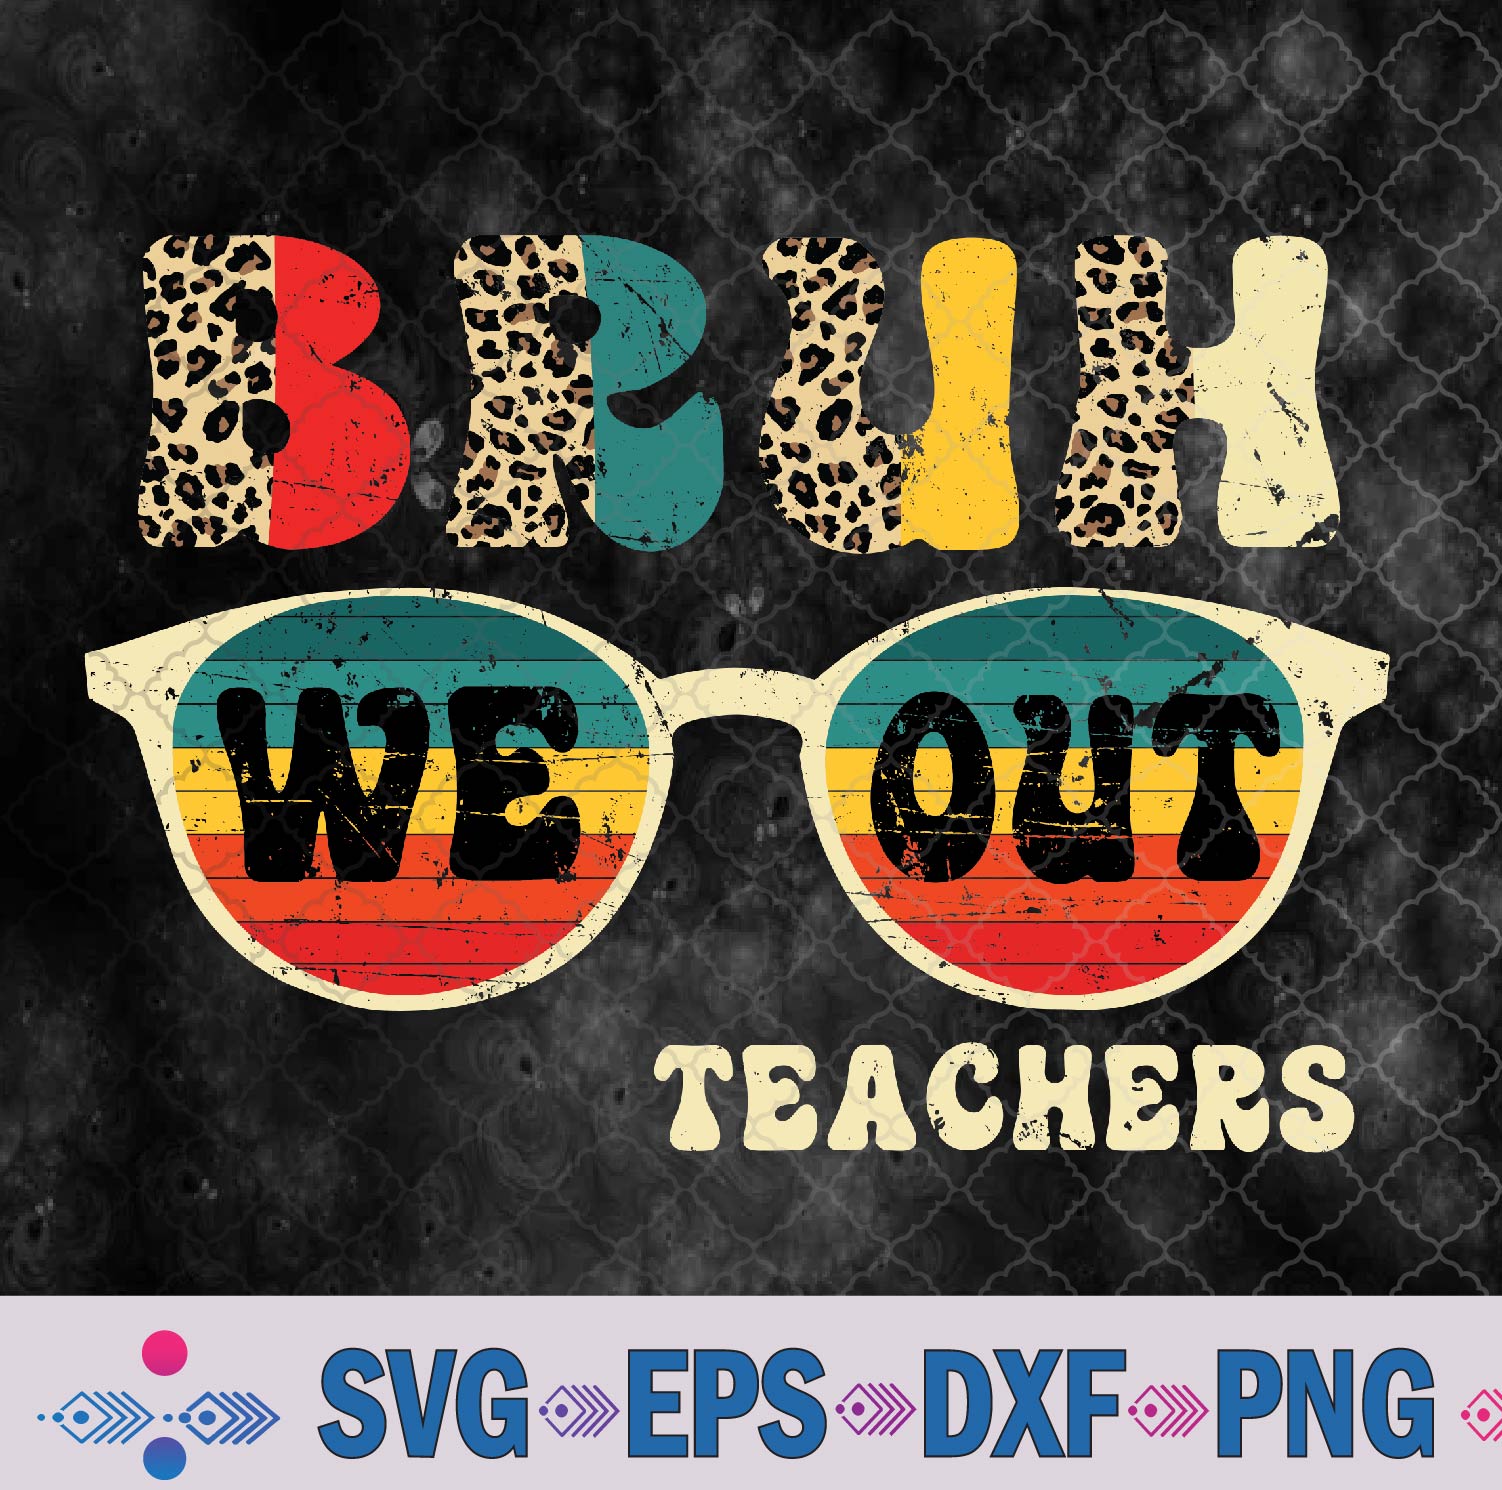 Cute End Of School Year Teacher Summer Bruh We Out Teachers Svg, Png, Digital Download